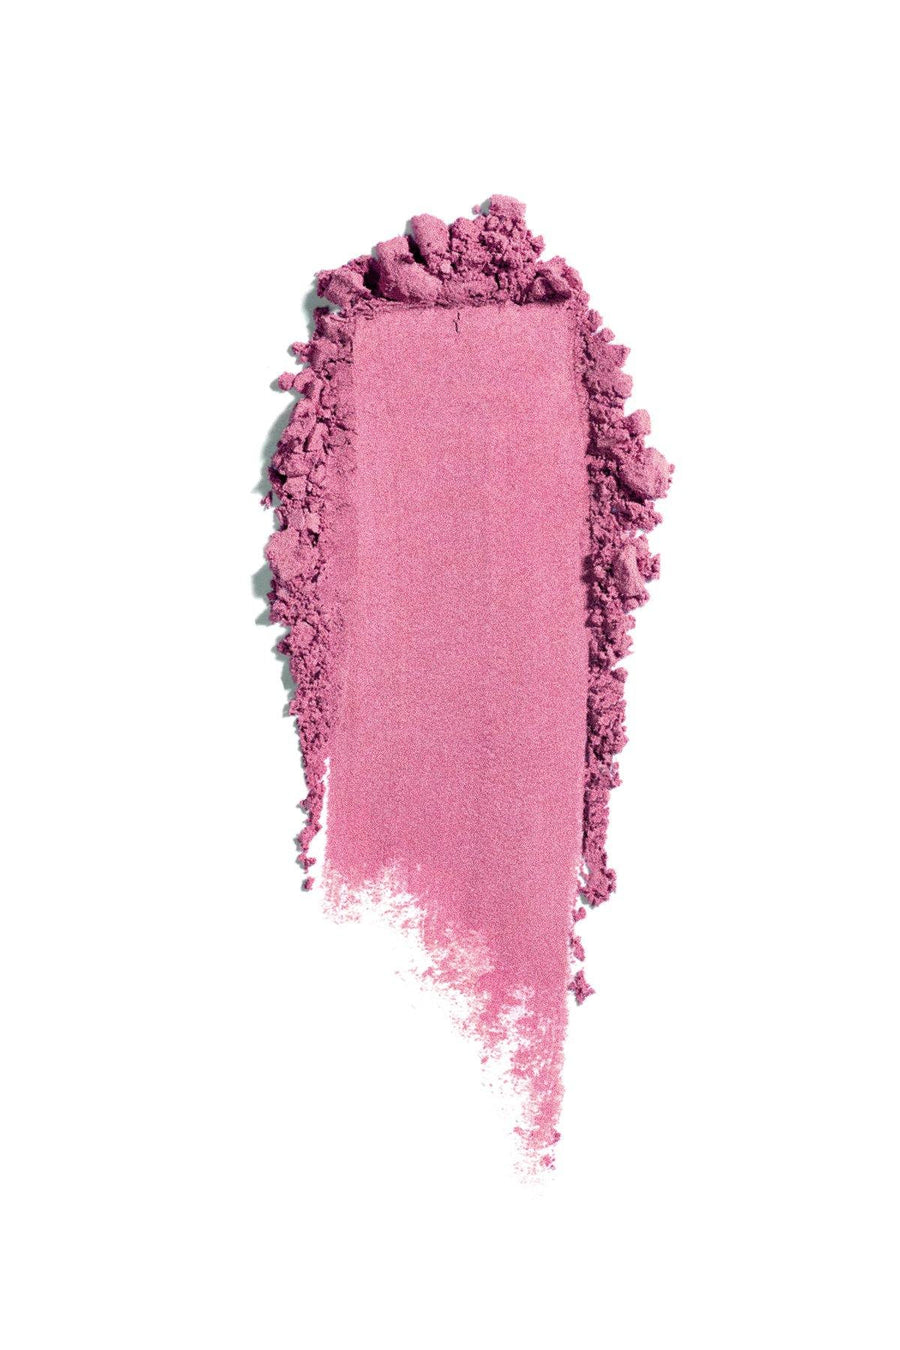 Mineral Blush #9 - Bubble Gum - Blend Mineral Cosmetics